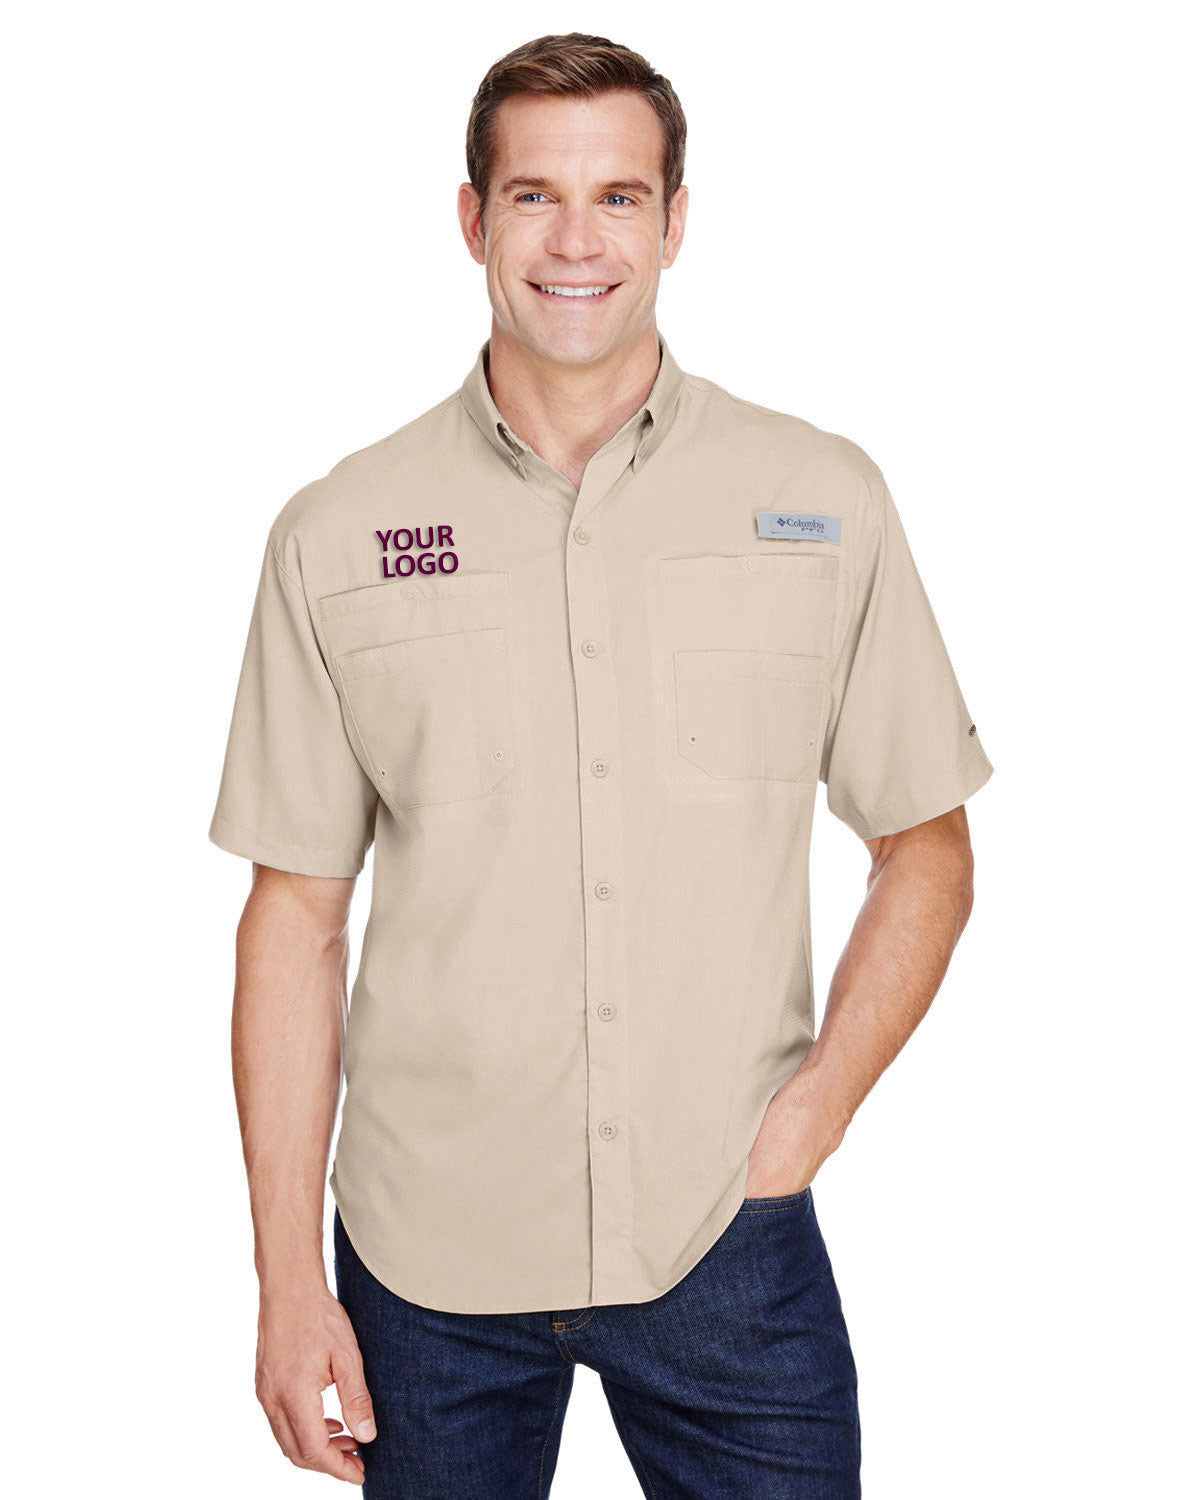 Columbia Fossil 7266 logo shirts